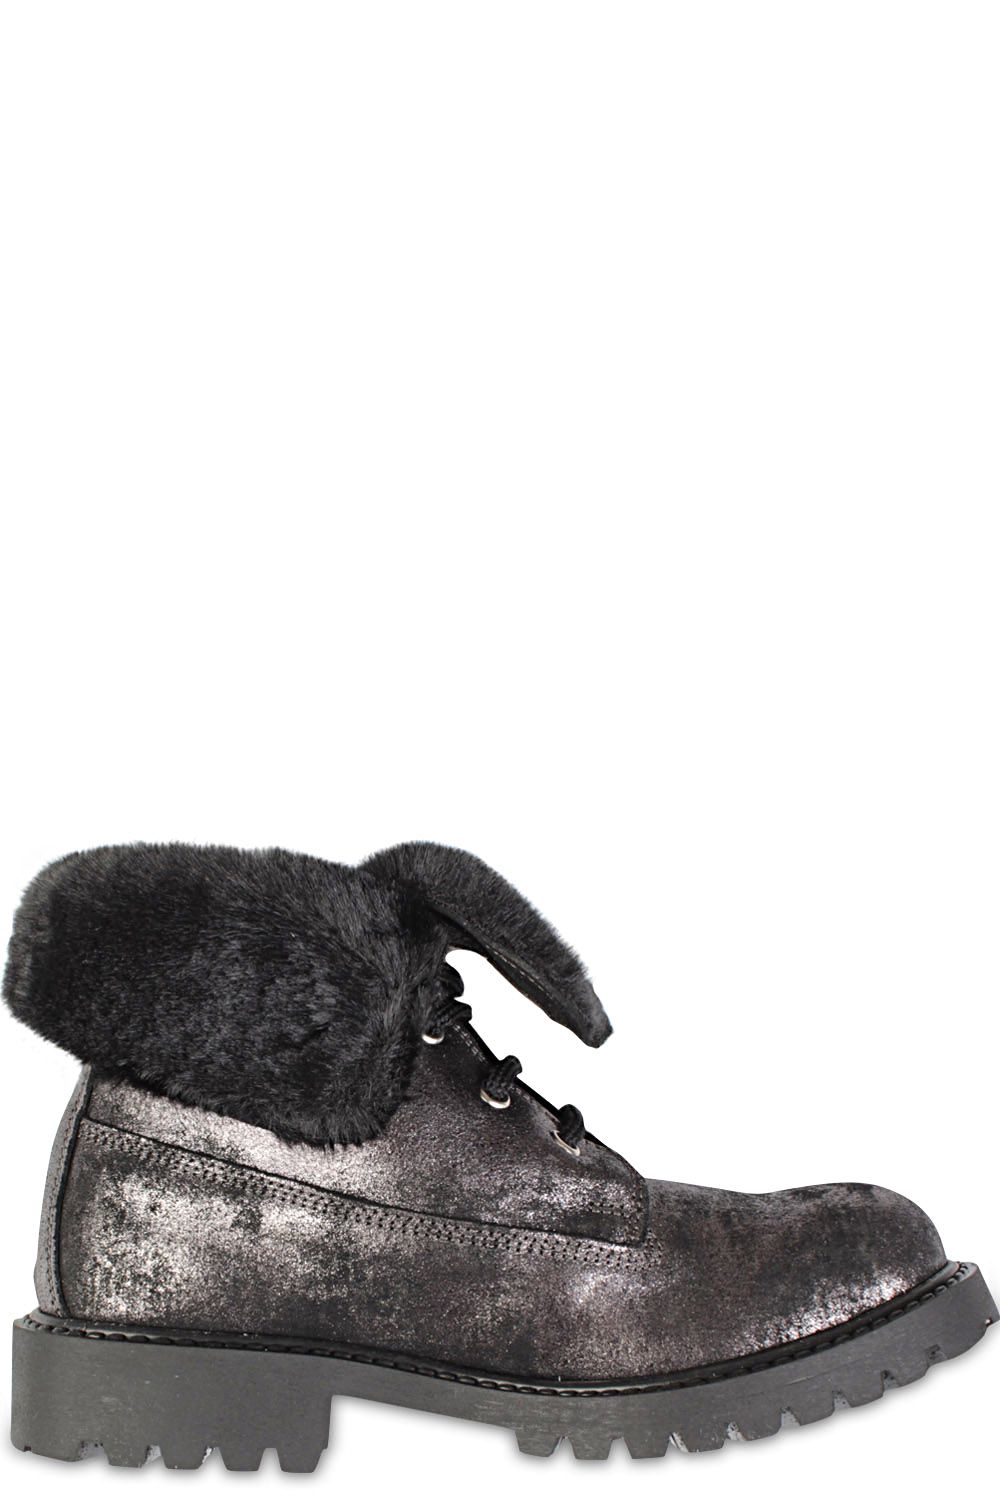 Ботинки Sho.e.b.76, размер 33, цвет серый 541AR2 - фото 2